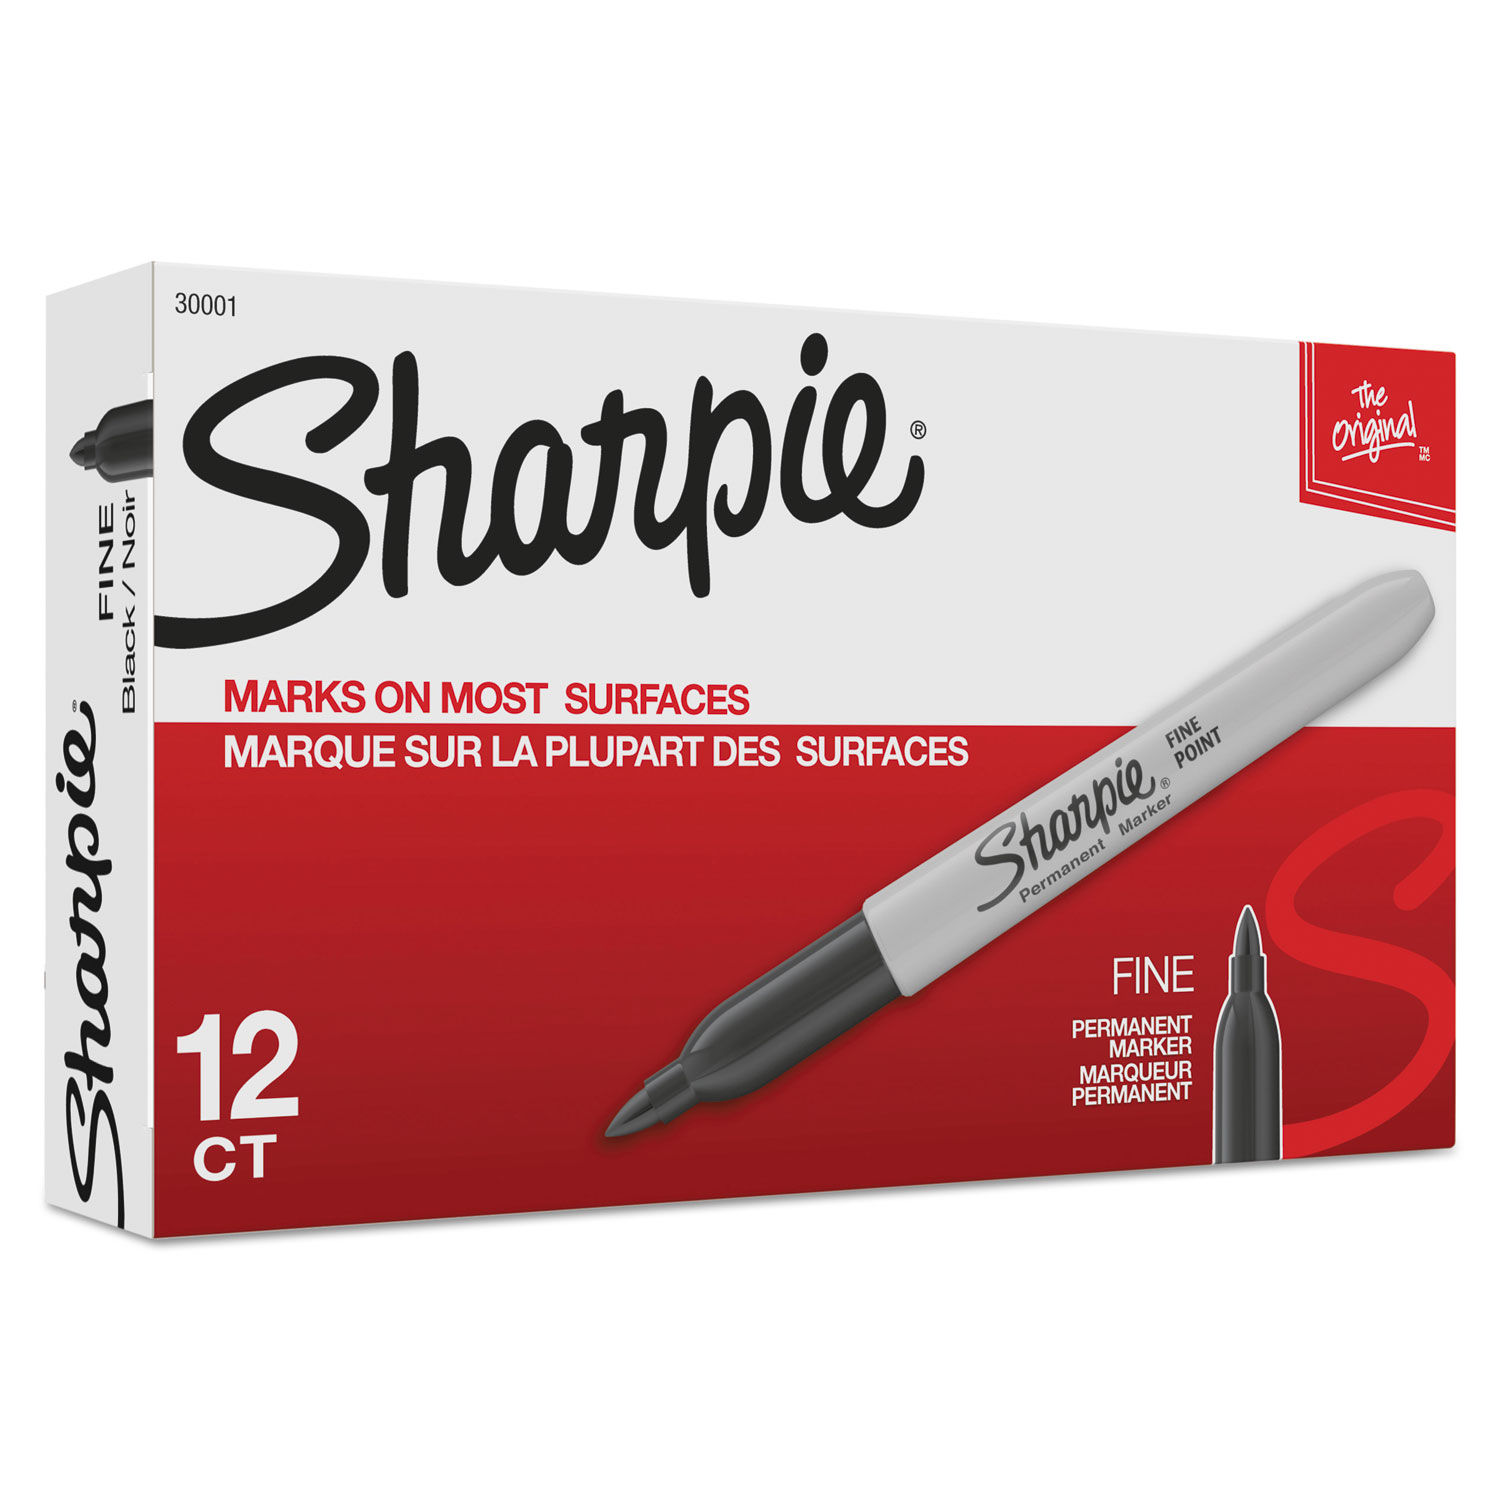 NEW 5 x Sharpie Pen Fine Tip Black Permanent Marker Sharpies Markers Set  Pack!